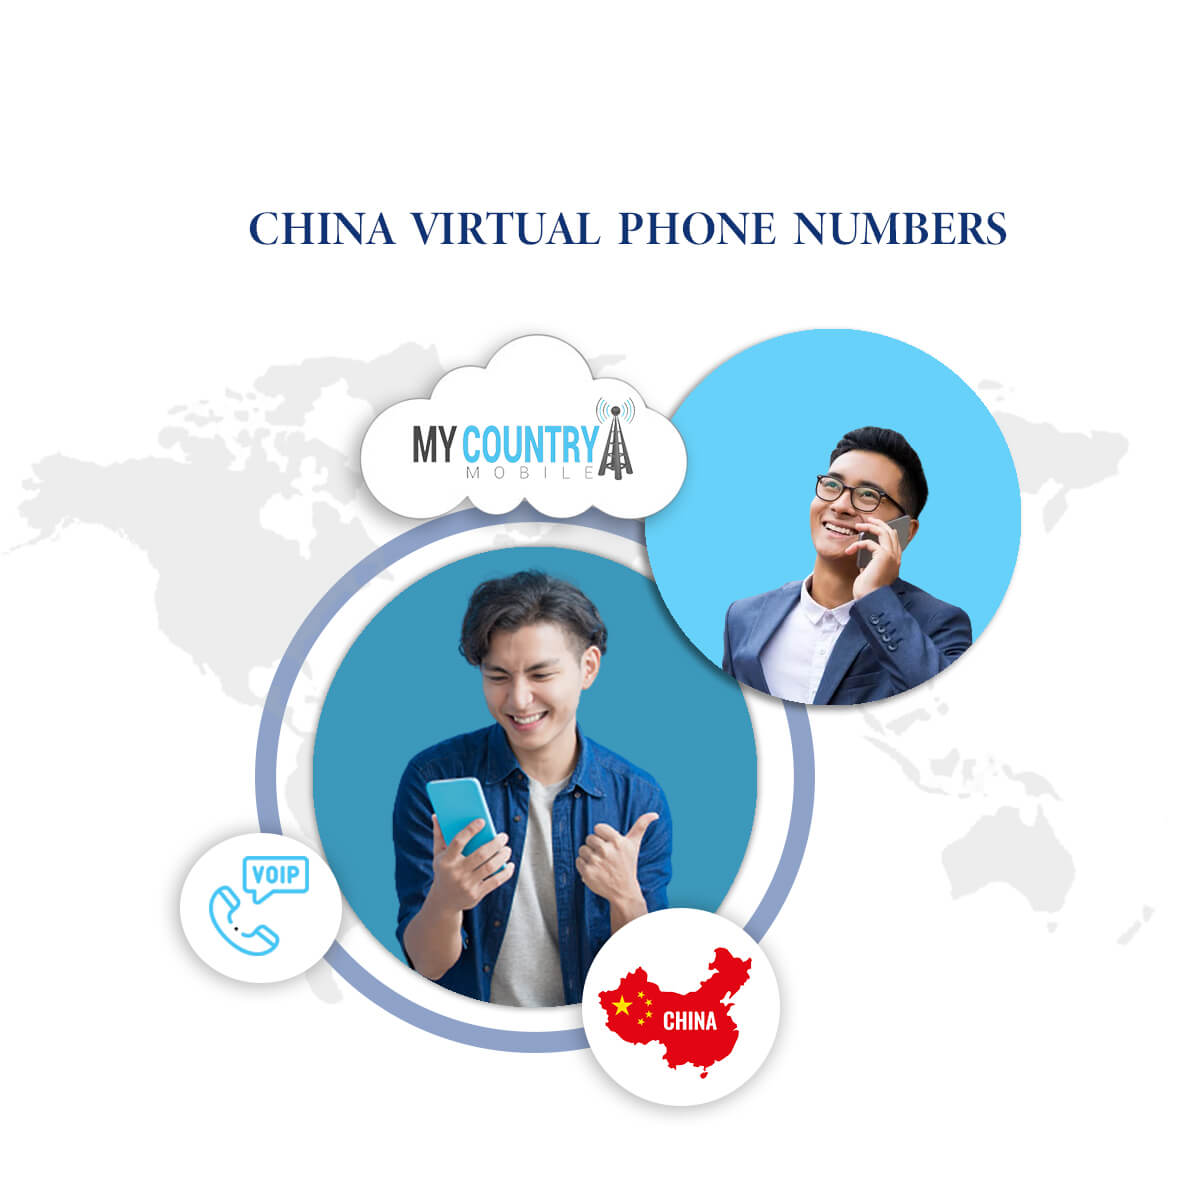 CHINA-VIRTUAL-PHONE-NUMBERS-1 (1)